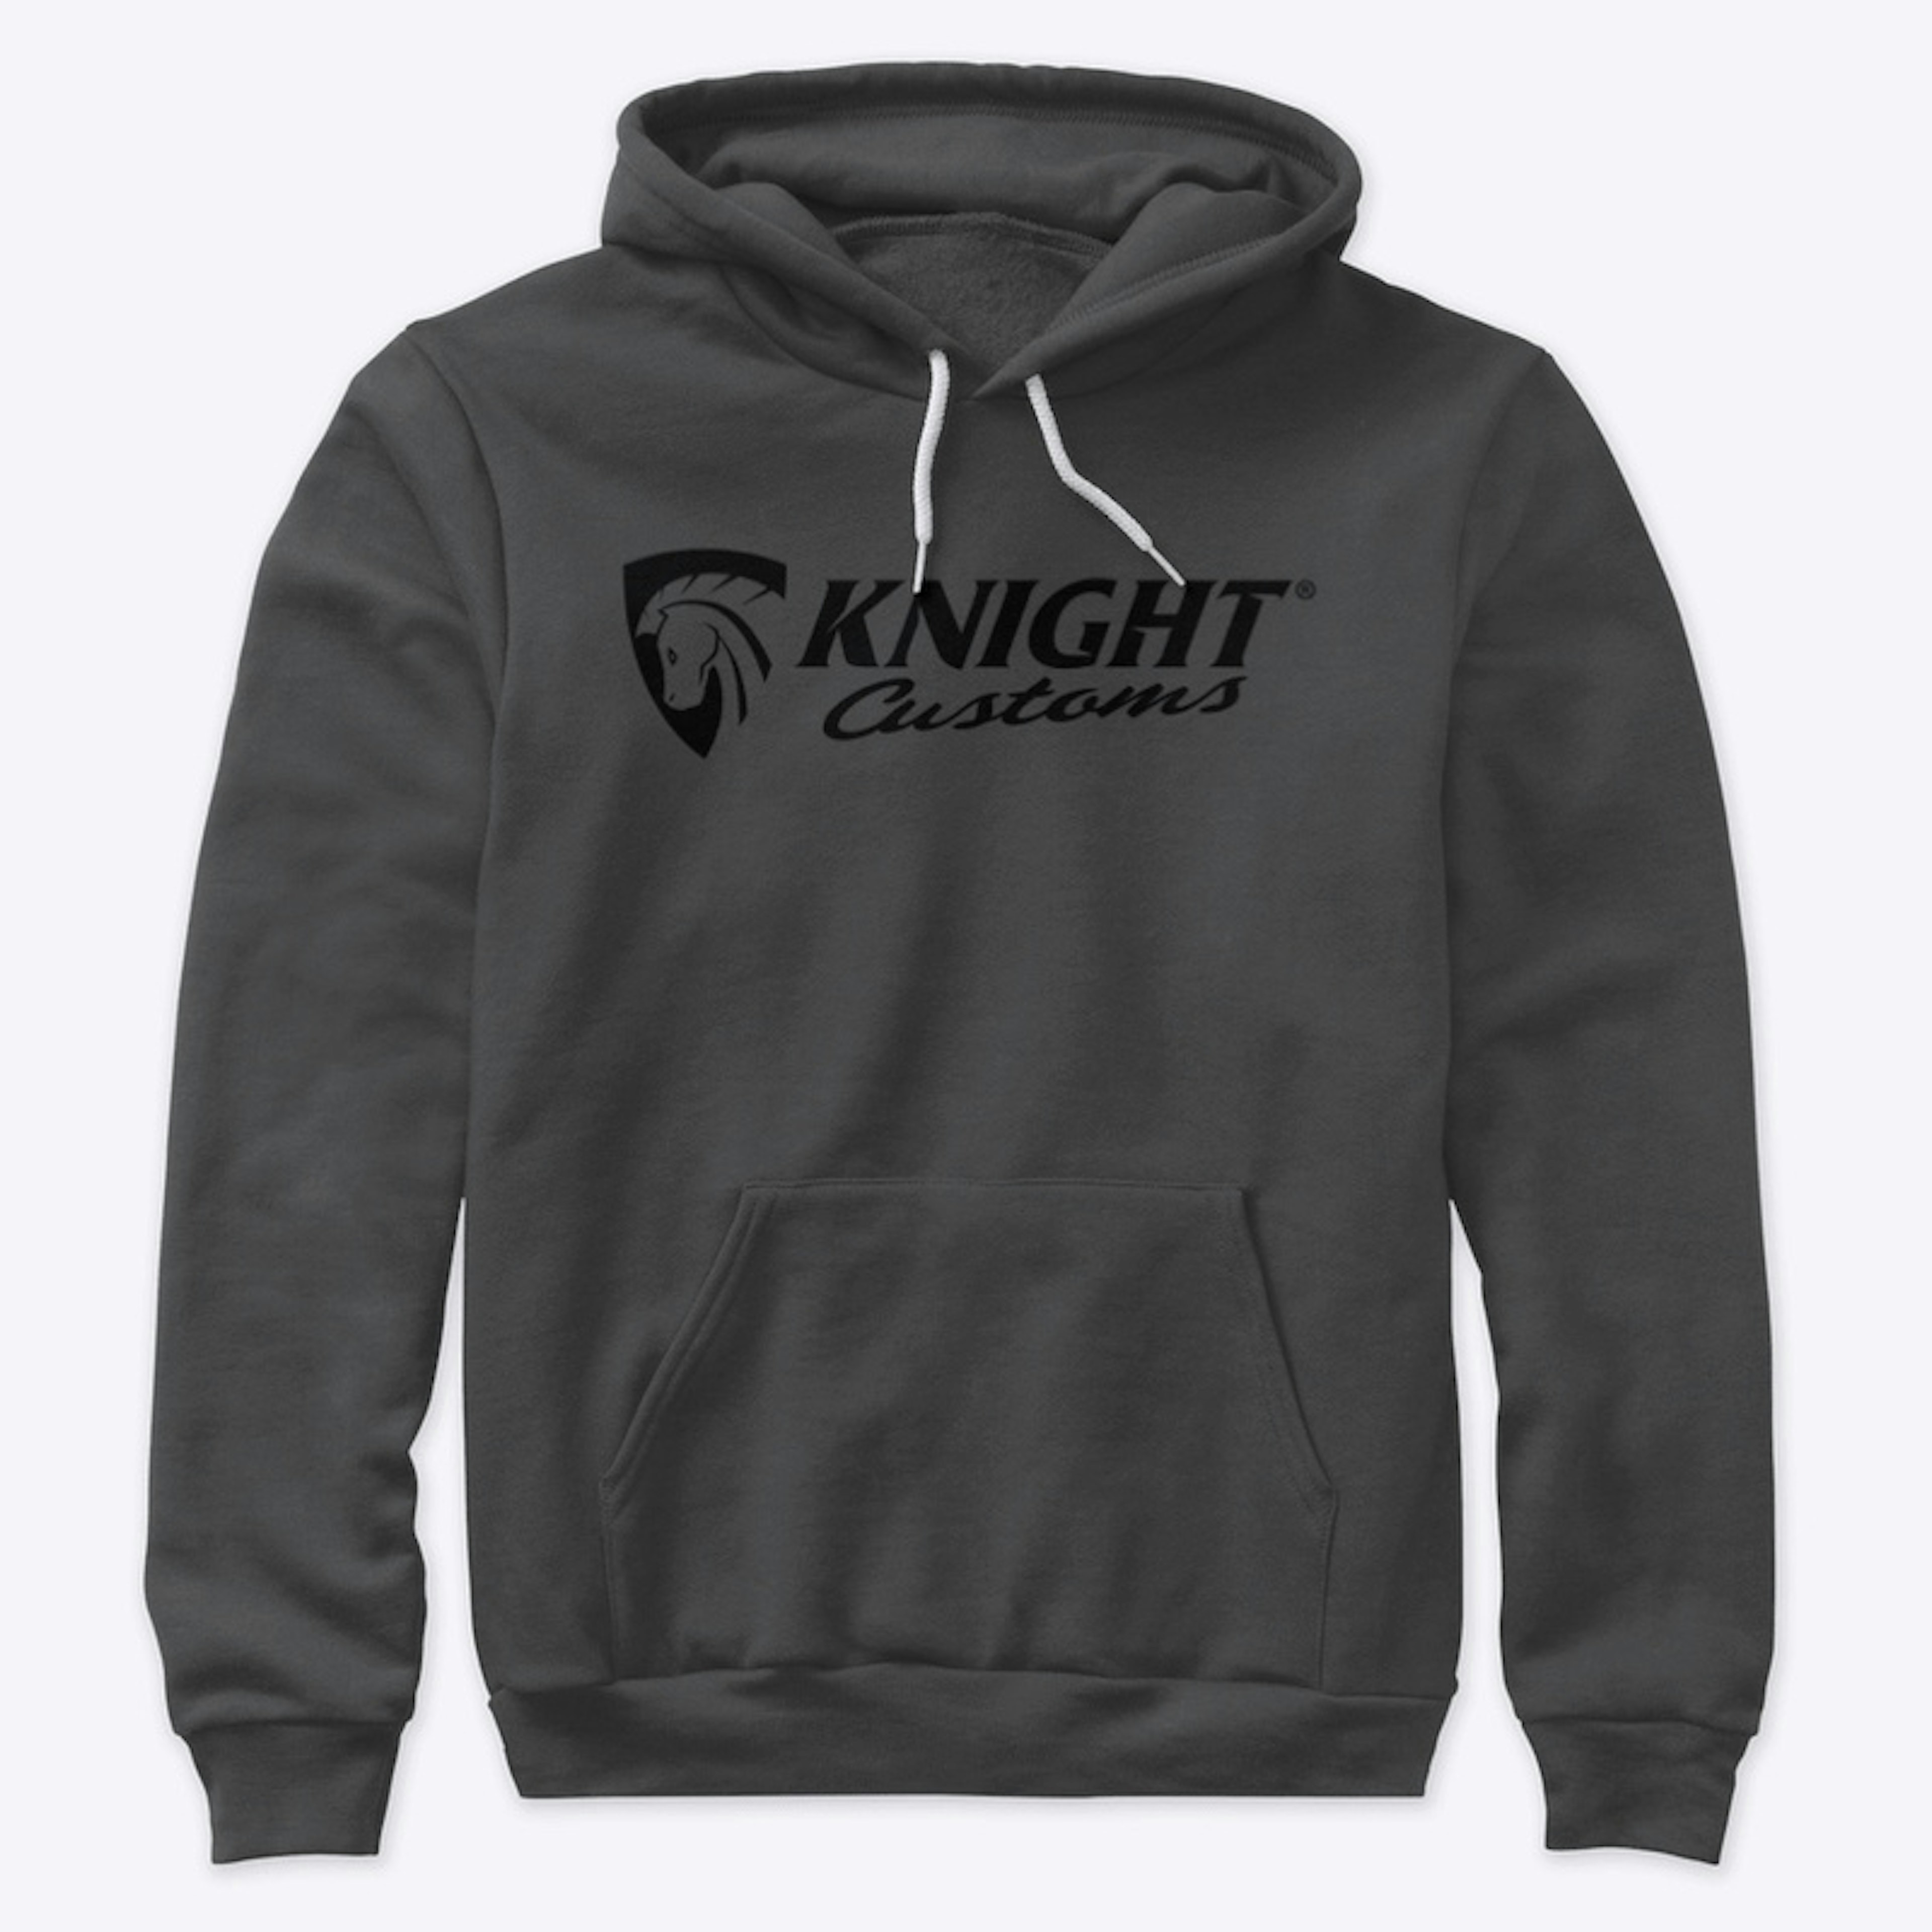 Knight Customs classic black logo